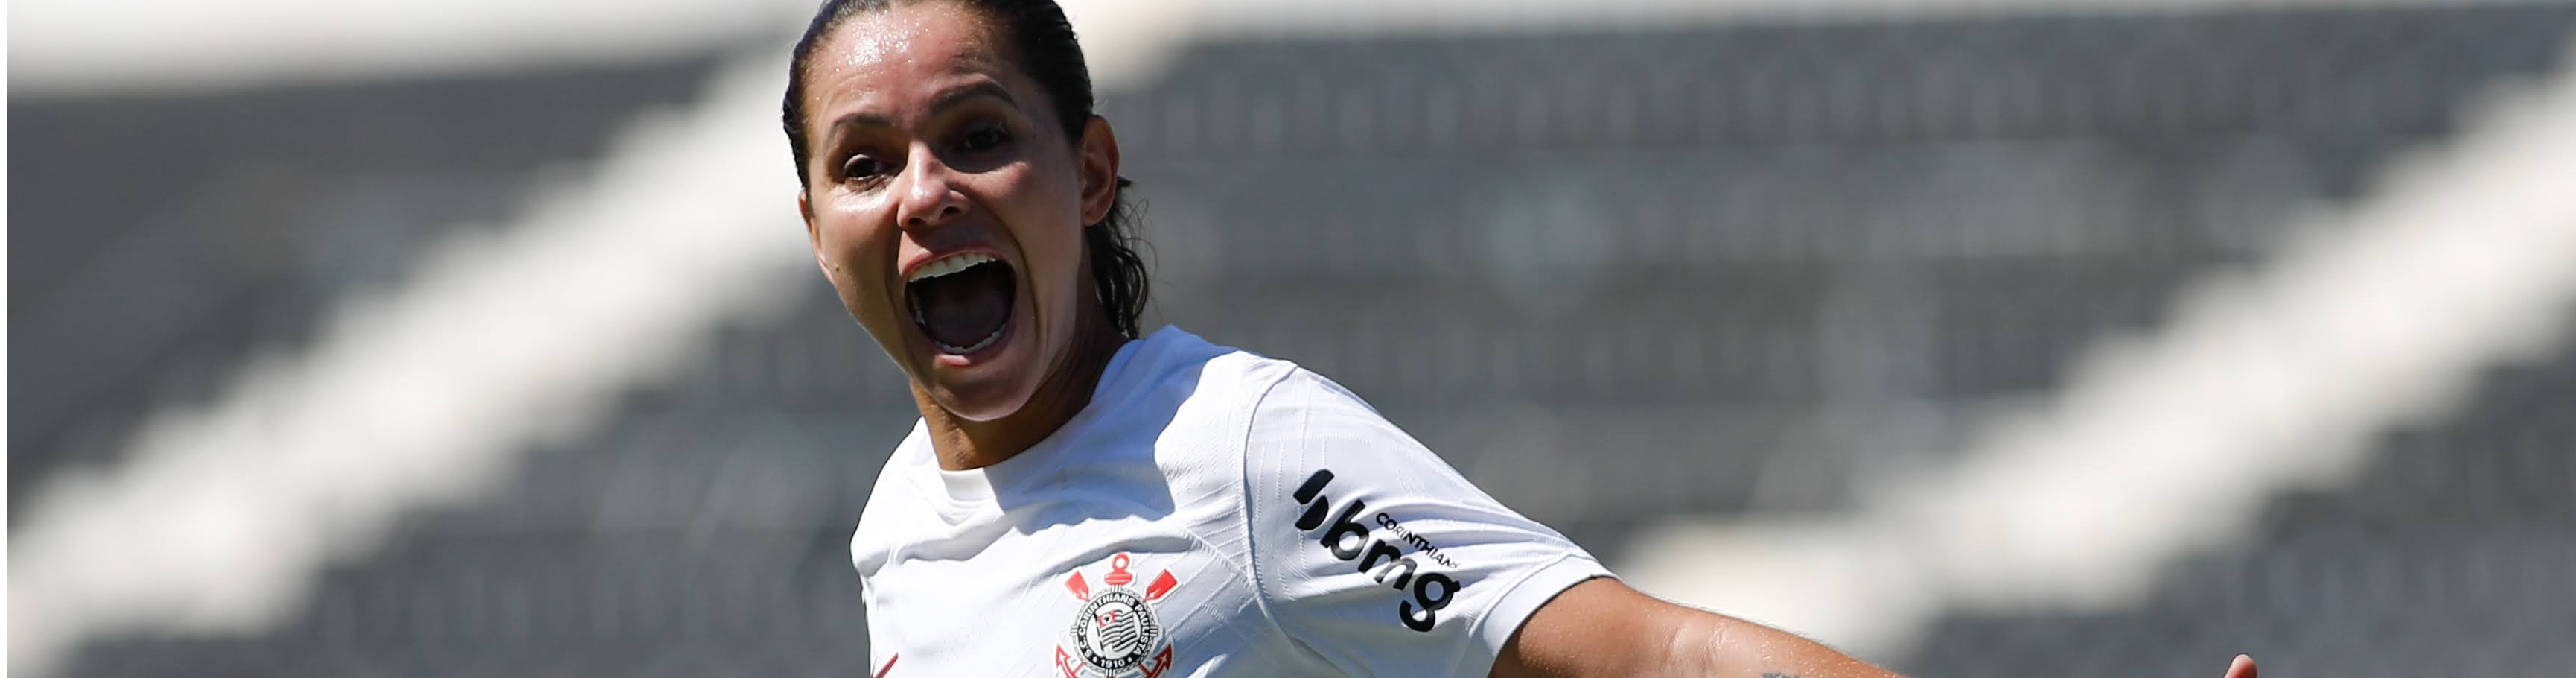 Futebol feminino: Corinthians domina o Fluminense e goleia por 5 a 0